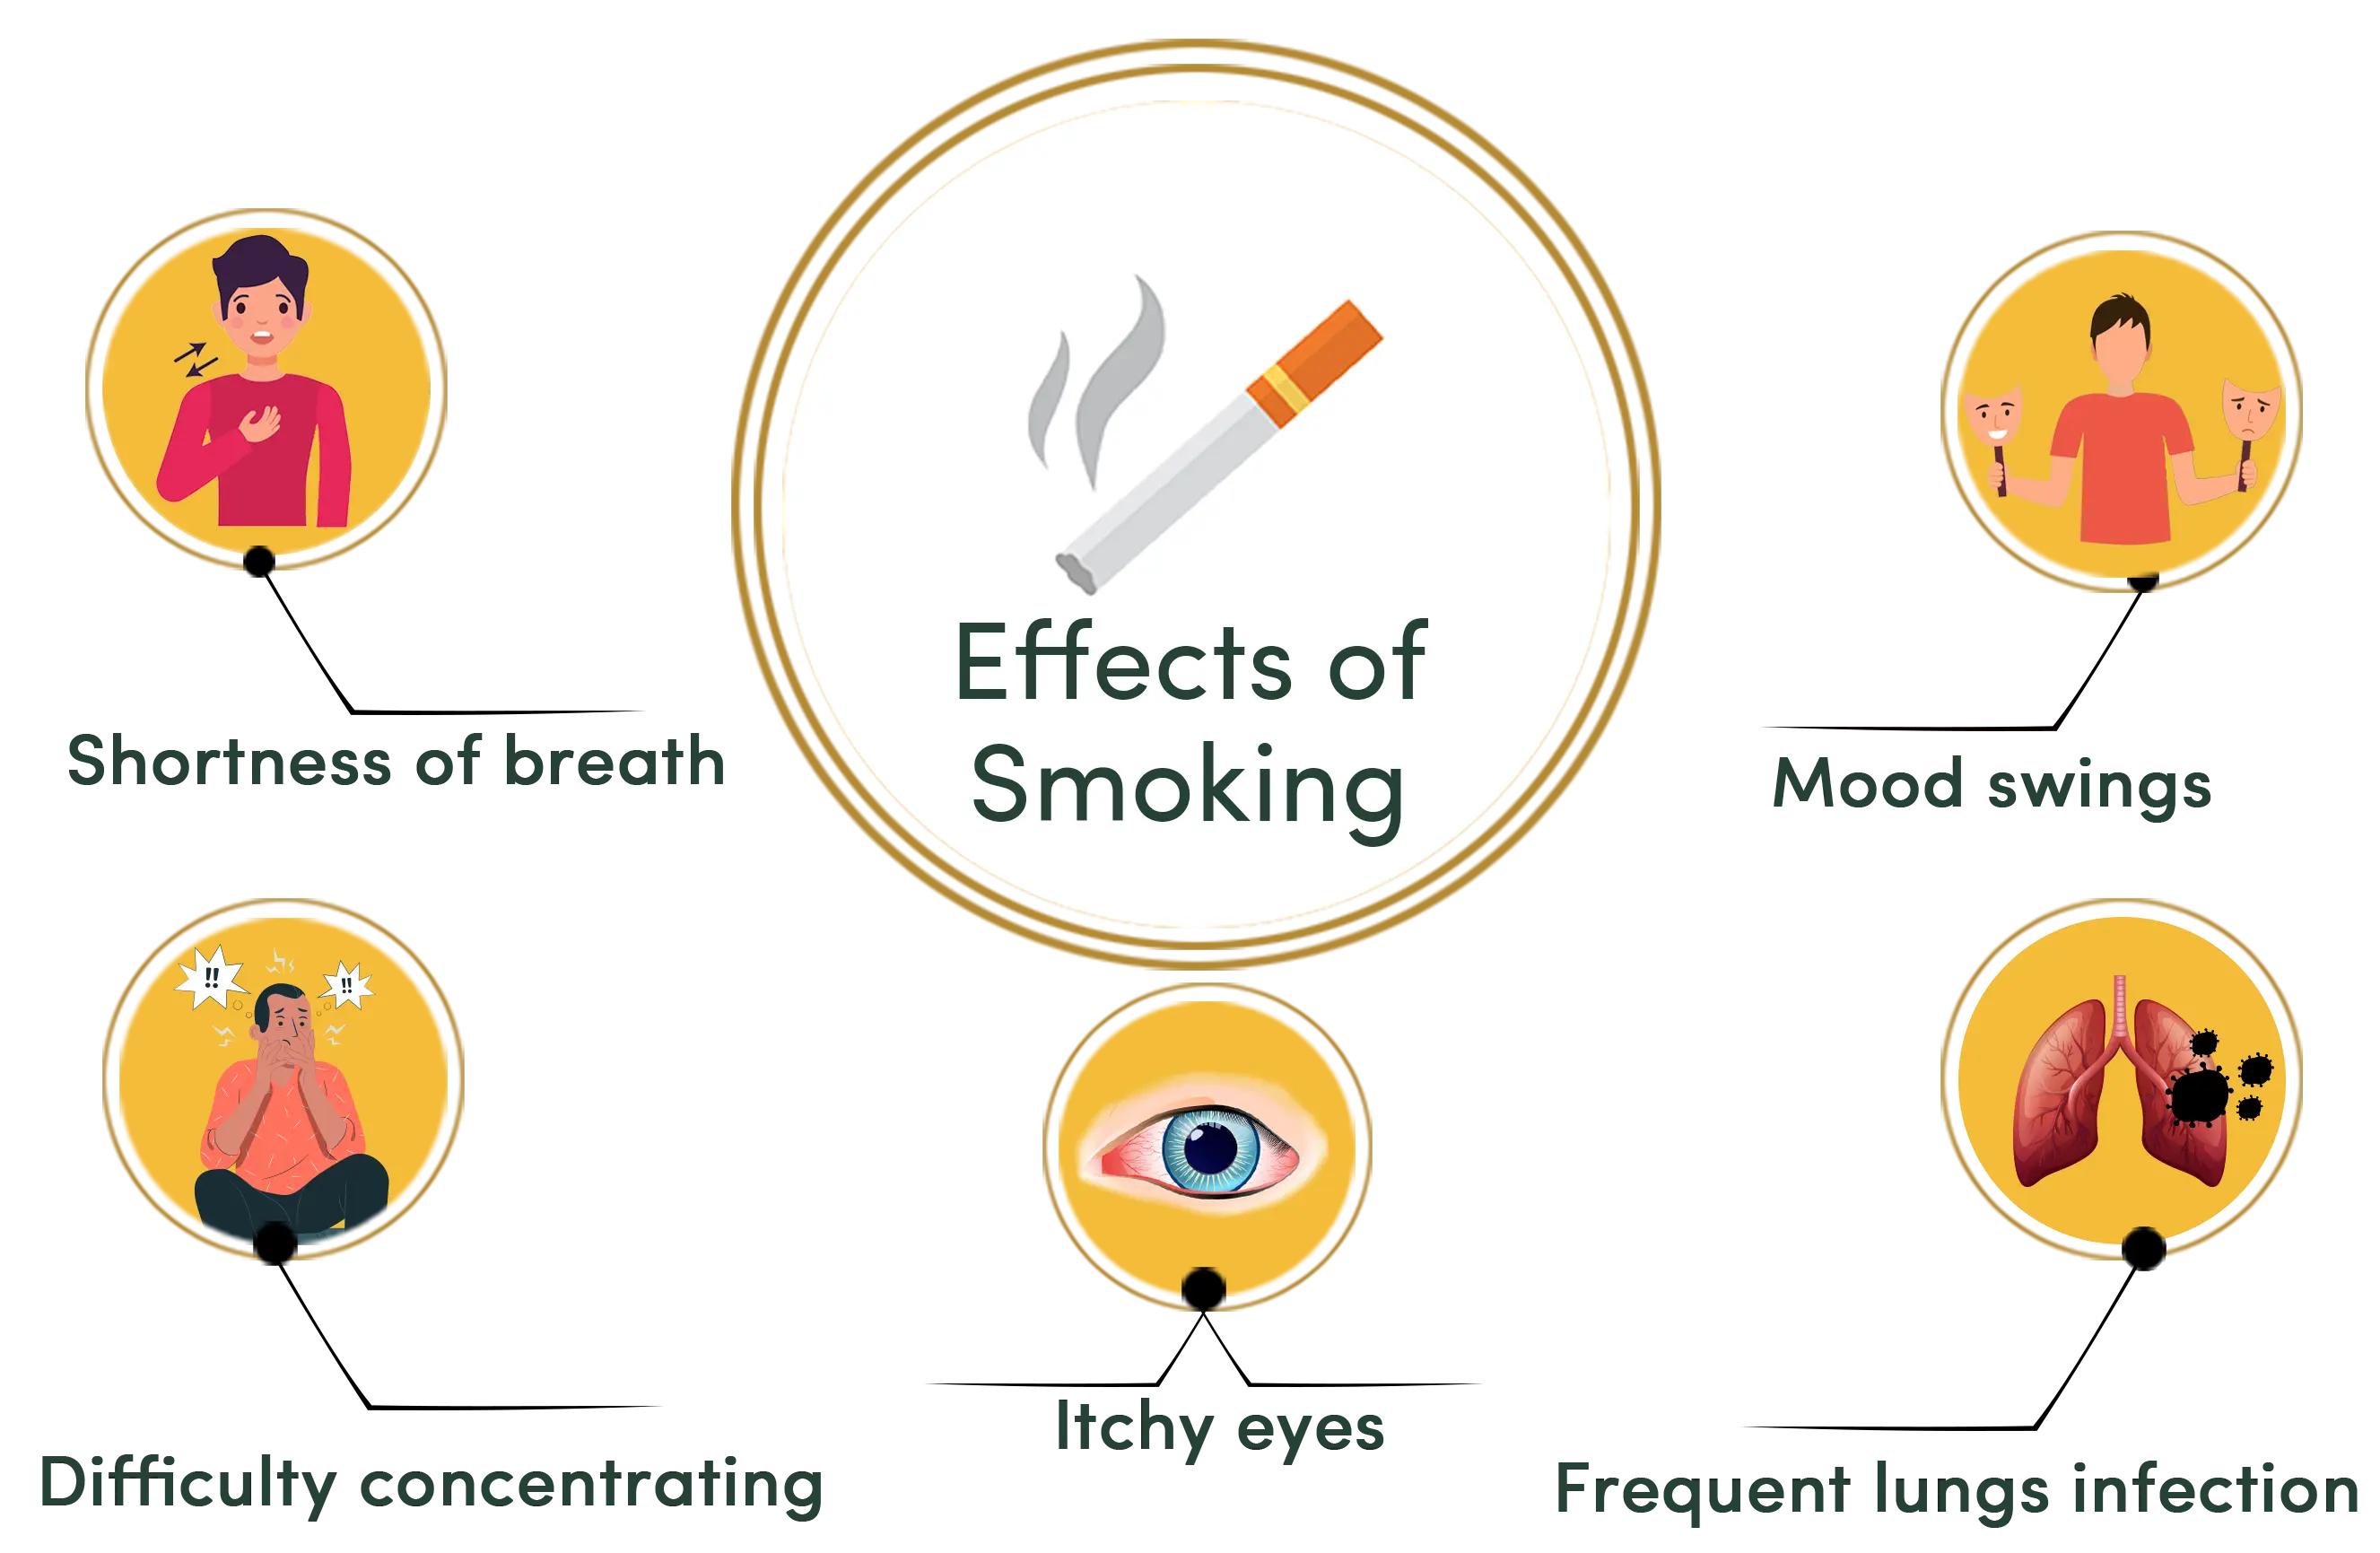 Smoking effects